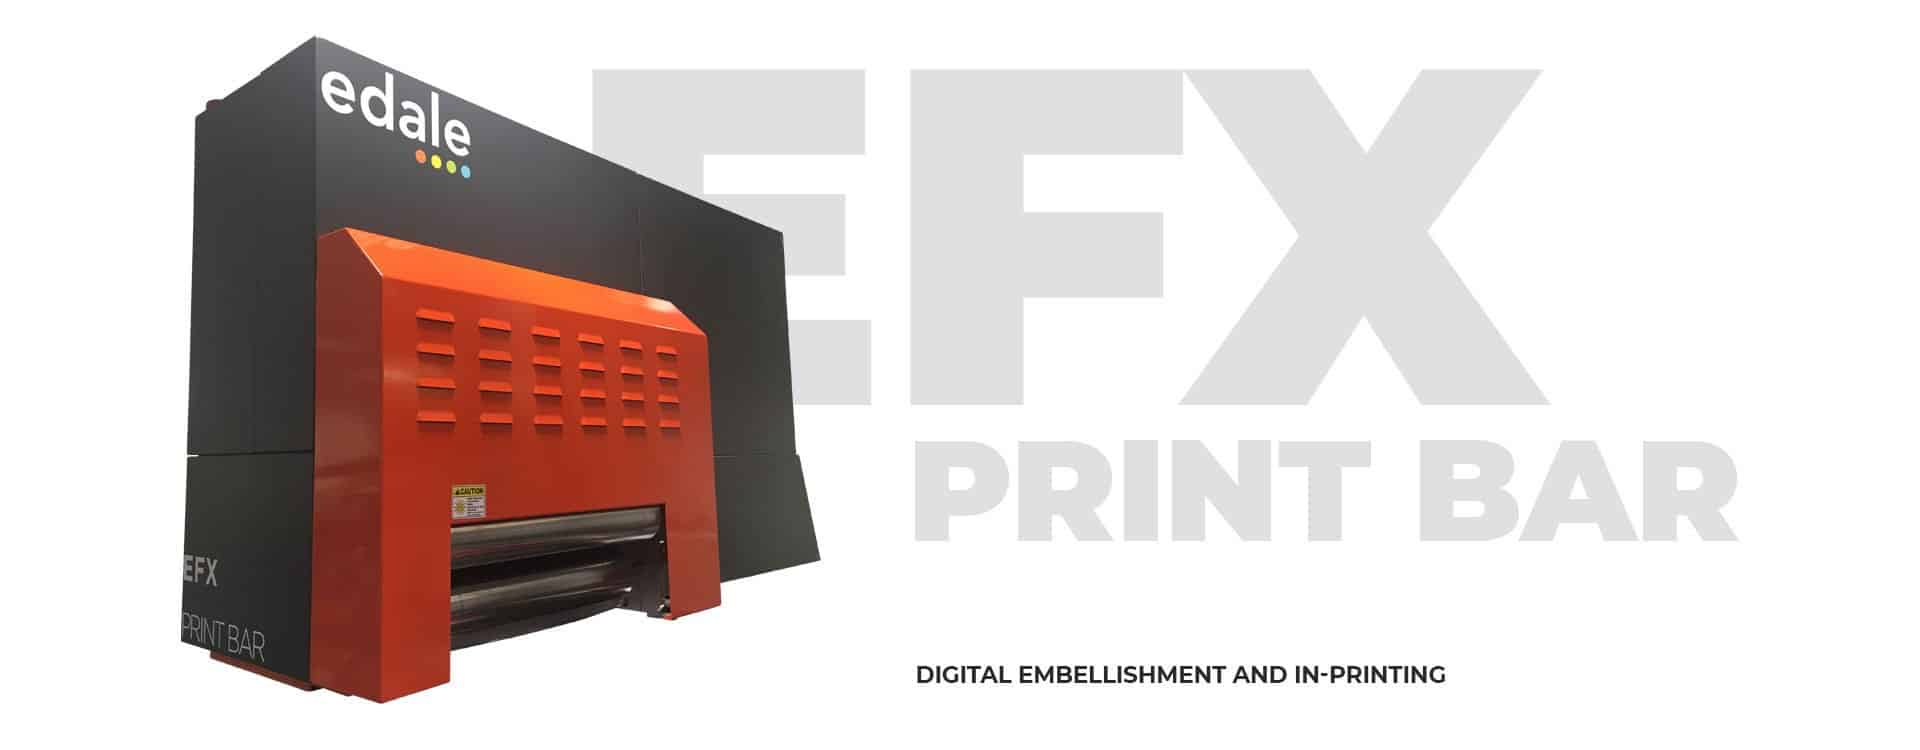 EFX Print Bar